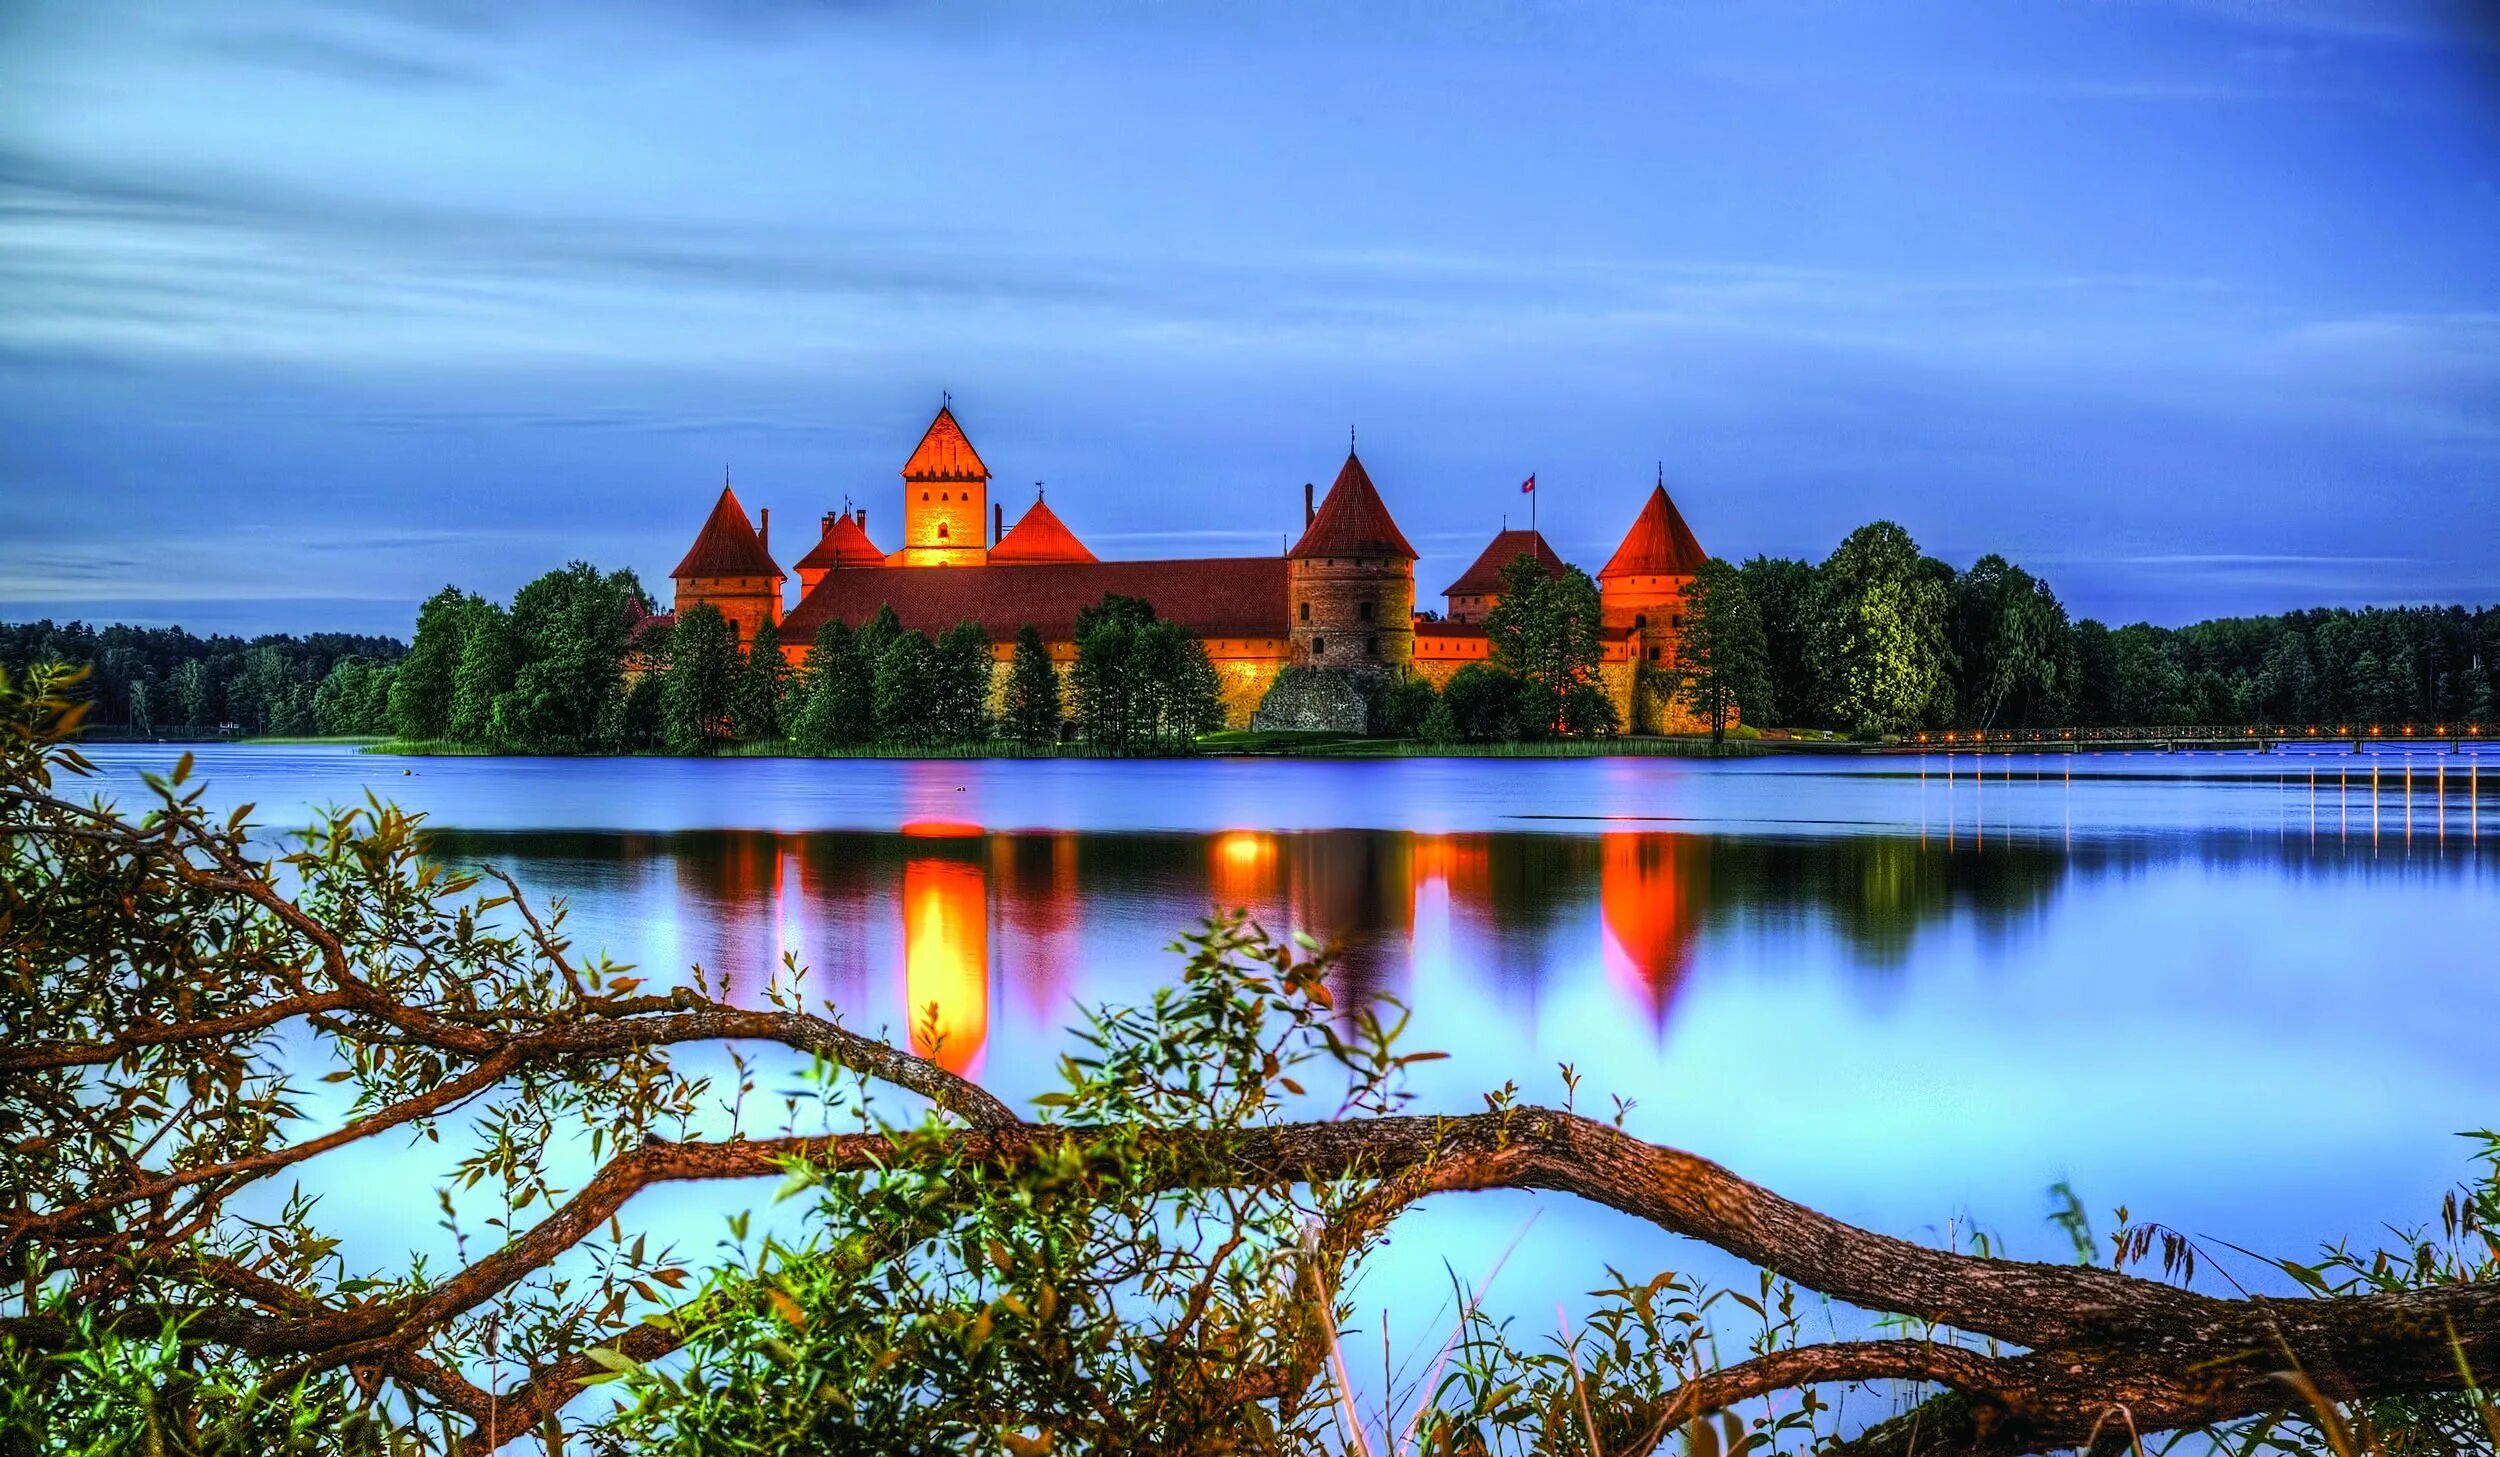 Тракайский замок. Тракайский замок Литва. Тракайский островной замок. Крепость Тракай Литва. Вильнюс крепость Тракай.